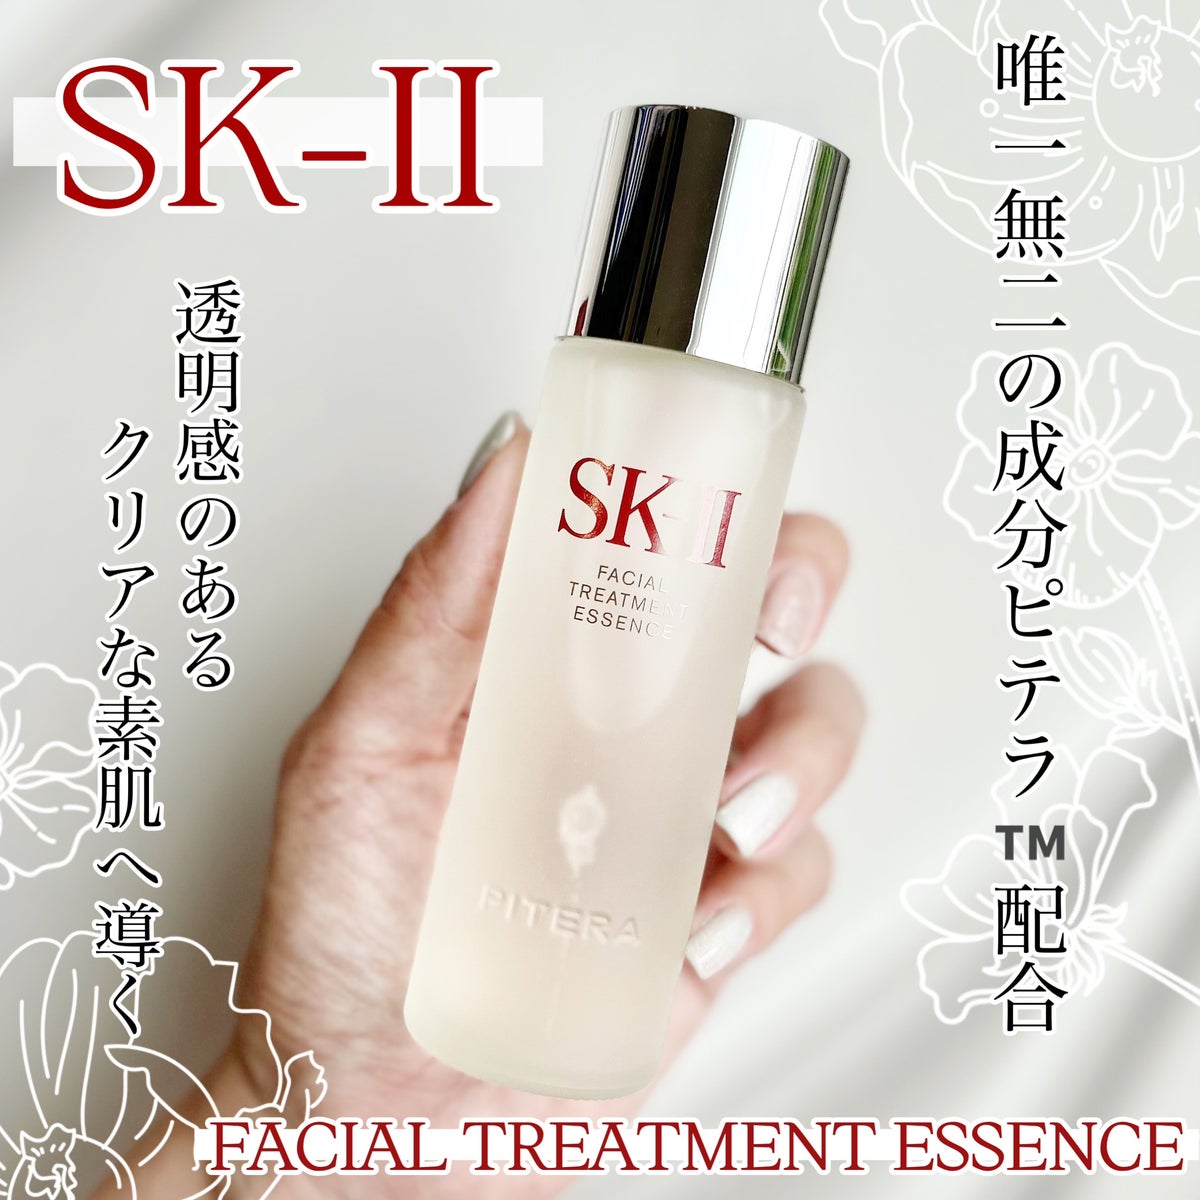 SK-II*☺︎フェイシャルトリートメントエッセンス♡オマケ付き - 化粧